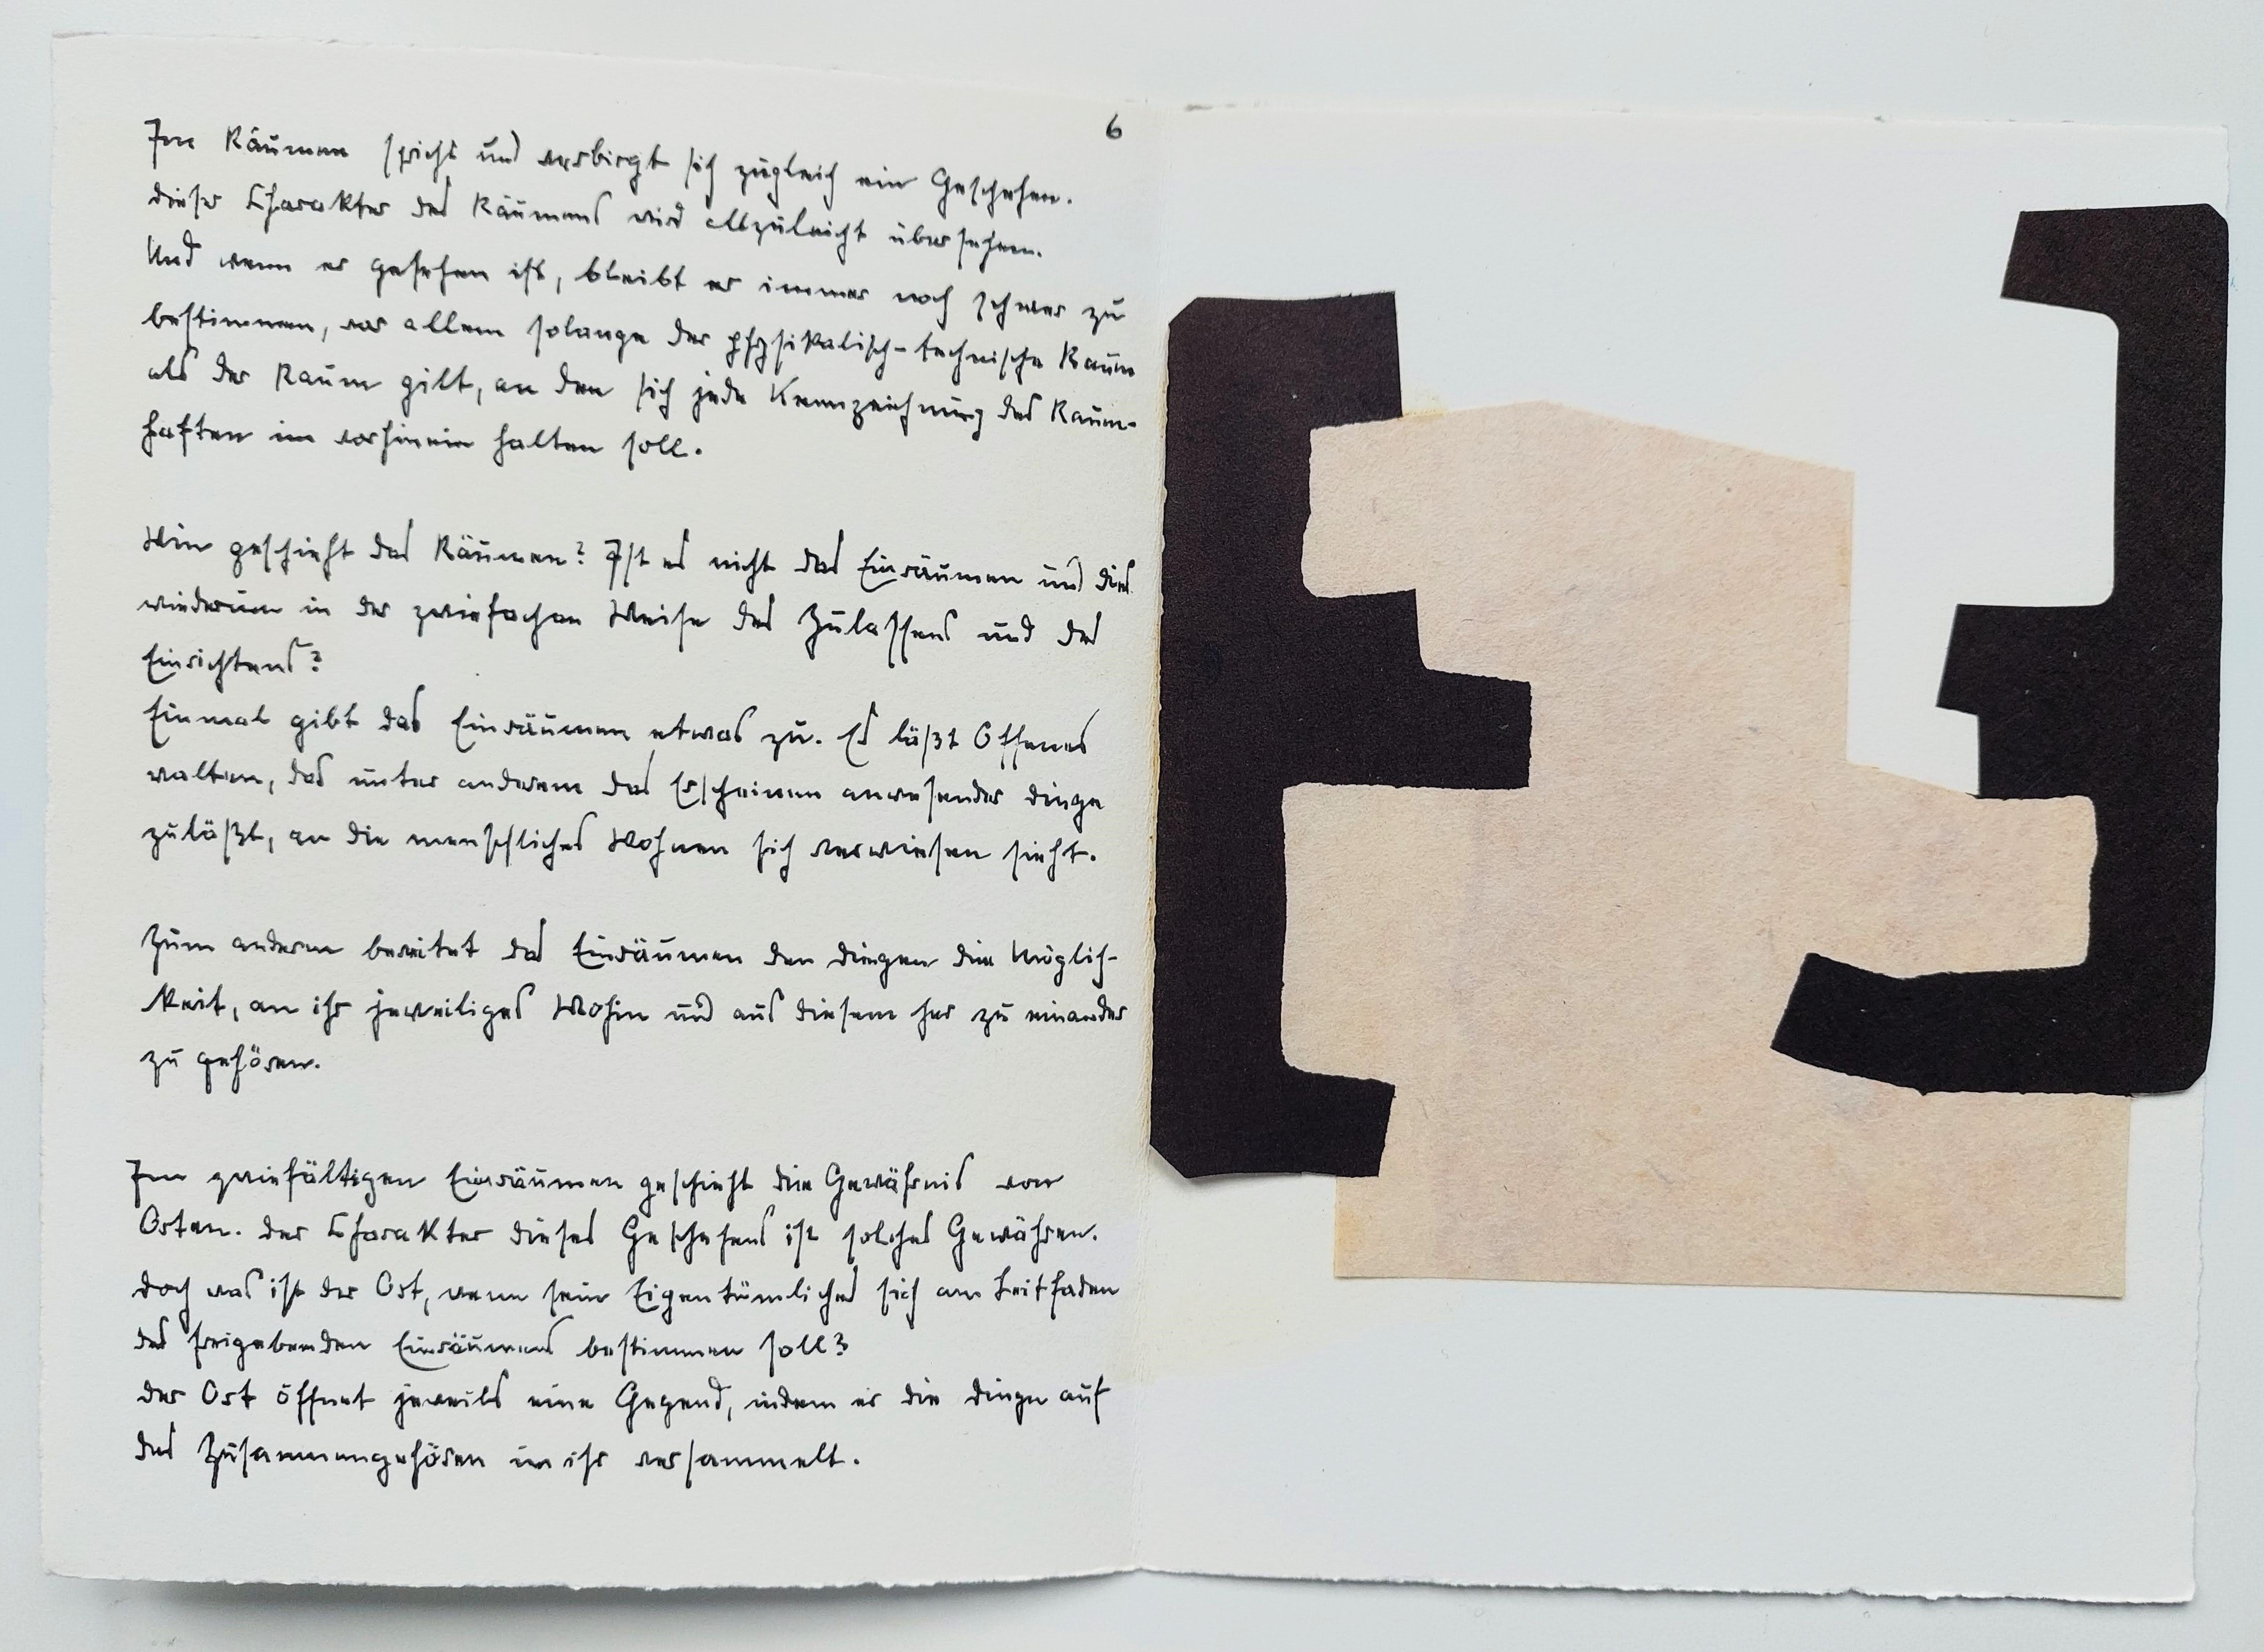 Eduardo CHILLIDA. Die Kunst und der Raum, 1969. Litografía original firmada a mano (1+7 litografías)